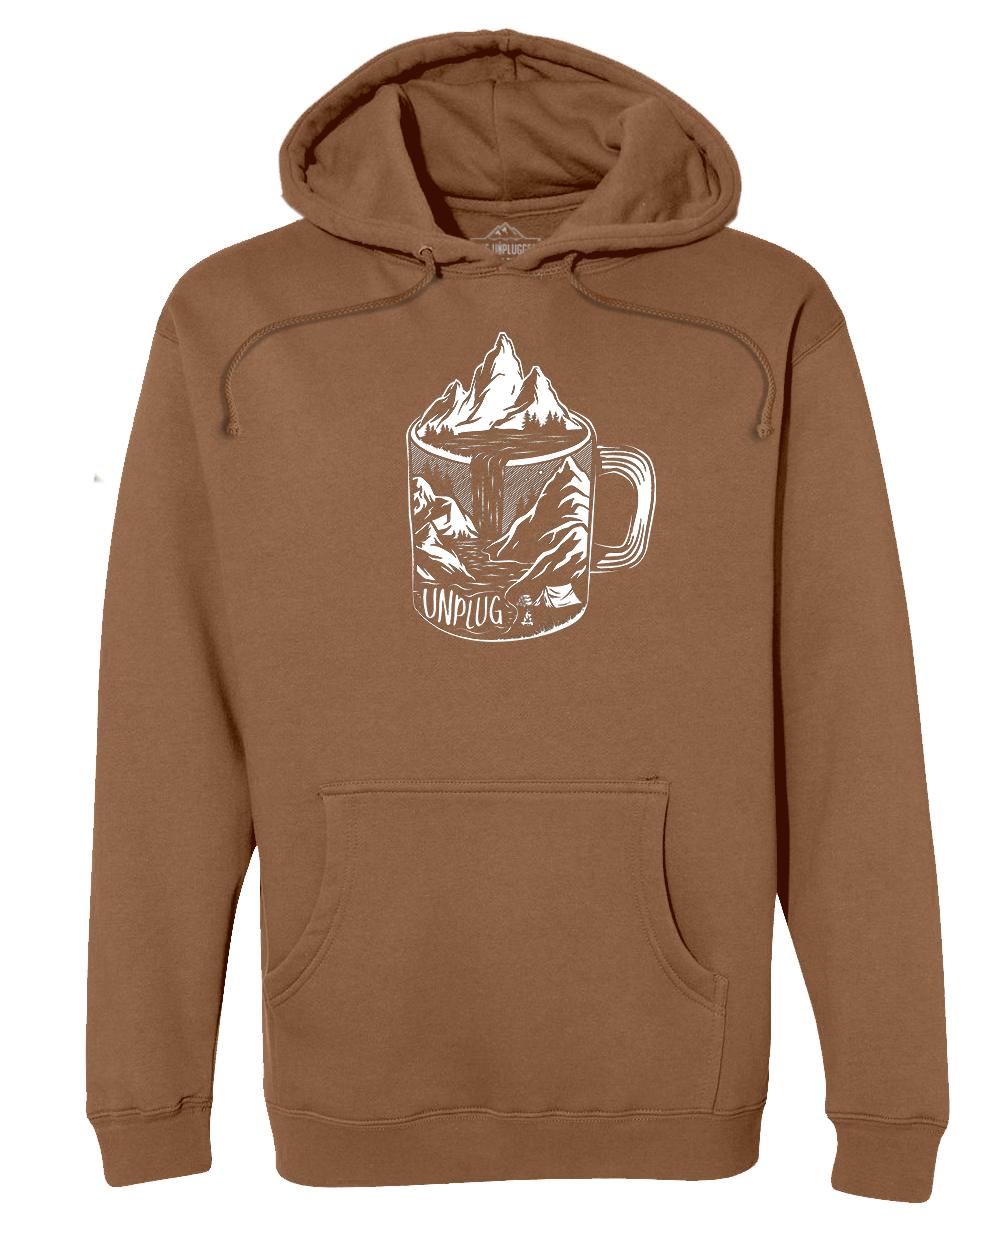 COFFEE MOUNTAIN SCENE Premium Heavyweight Hooded Sweatshirt